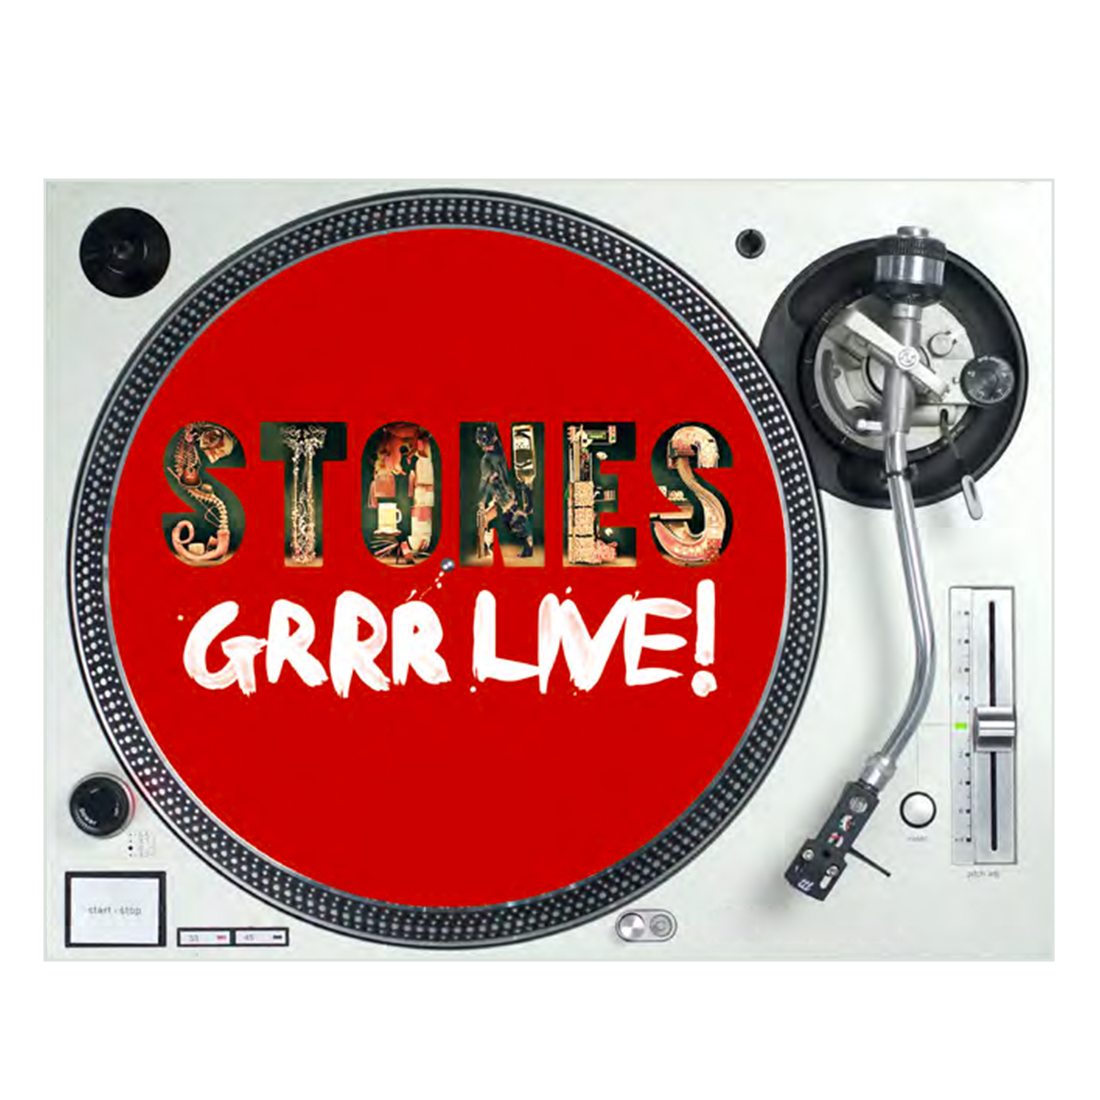 The Rolling Stones - Stones "GRRR!" Live Slipmat